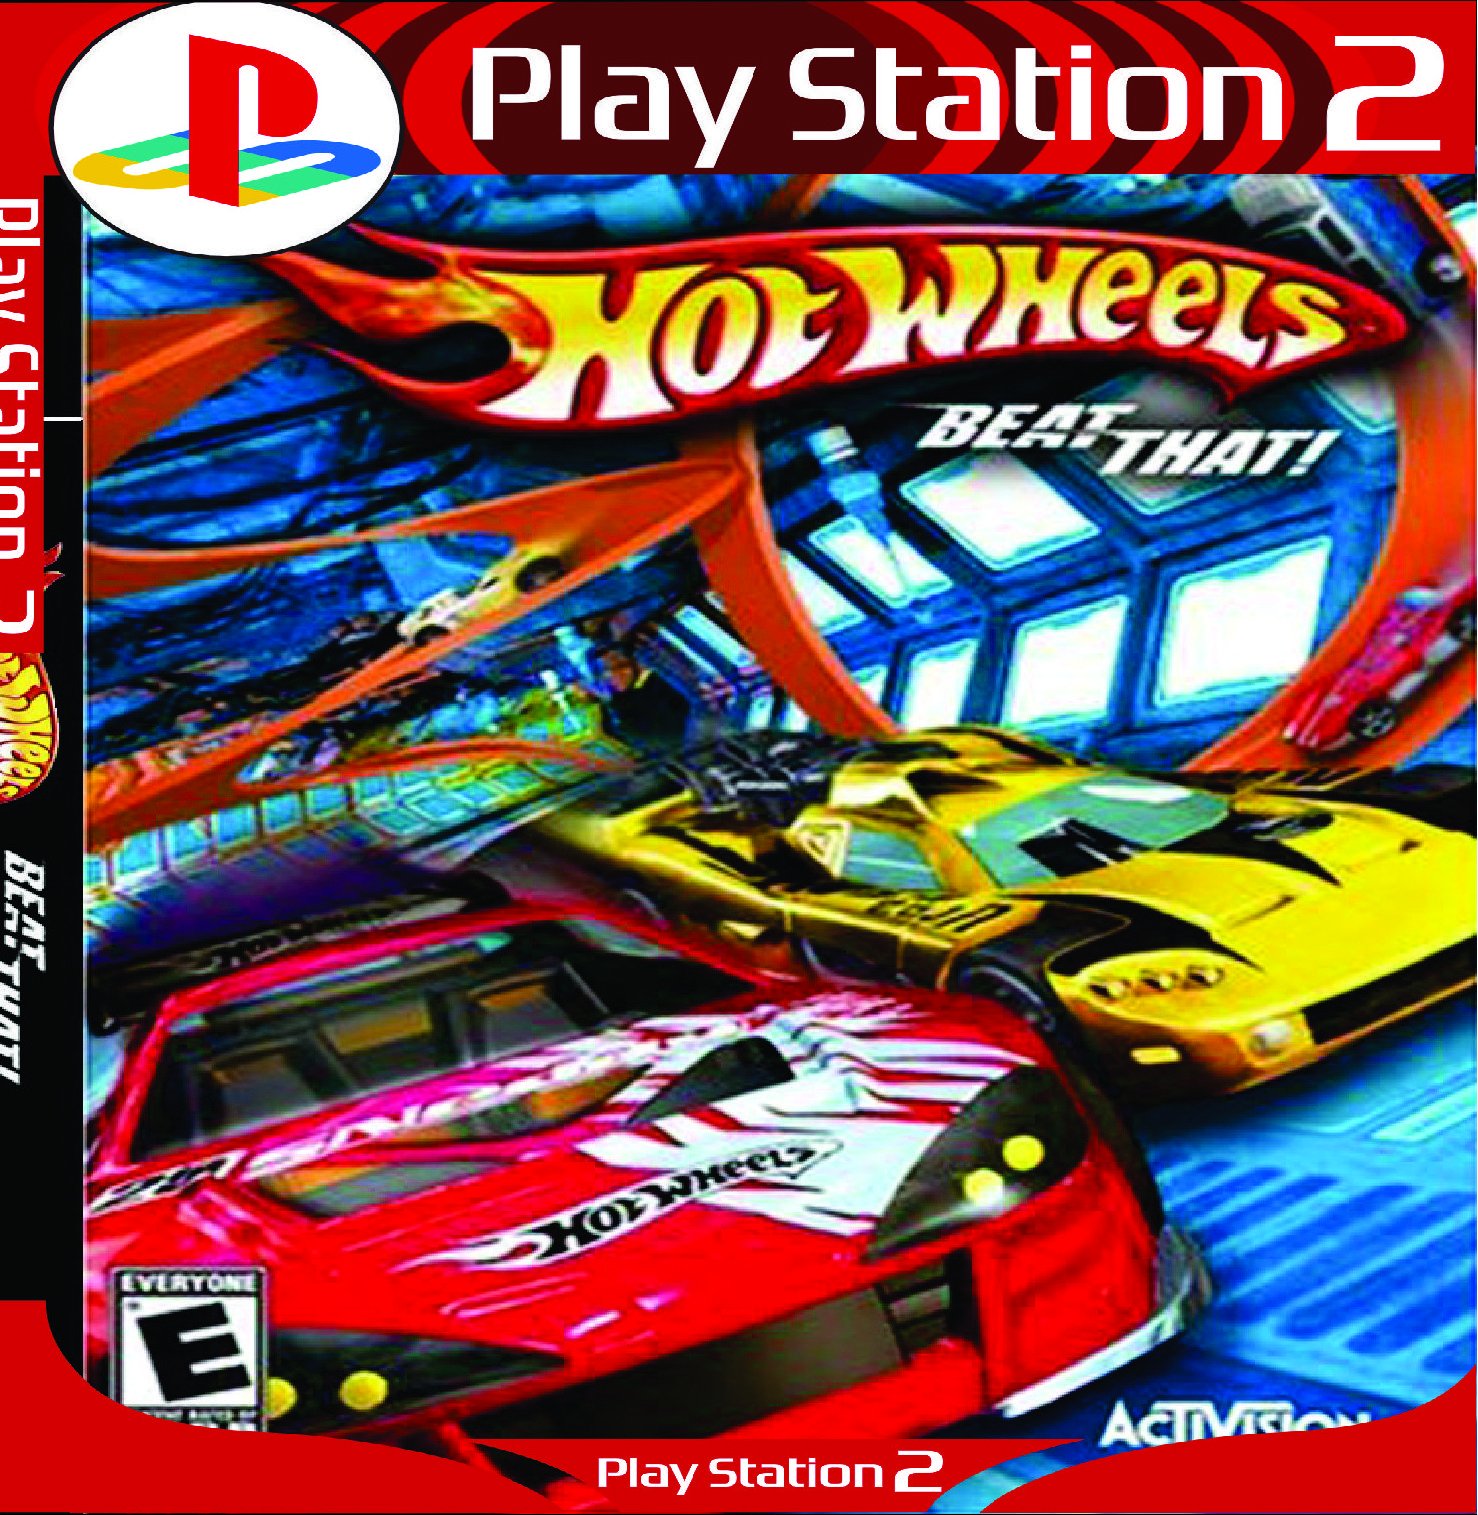 Jogos de Hot Wheels no Jogos 360